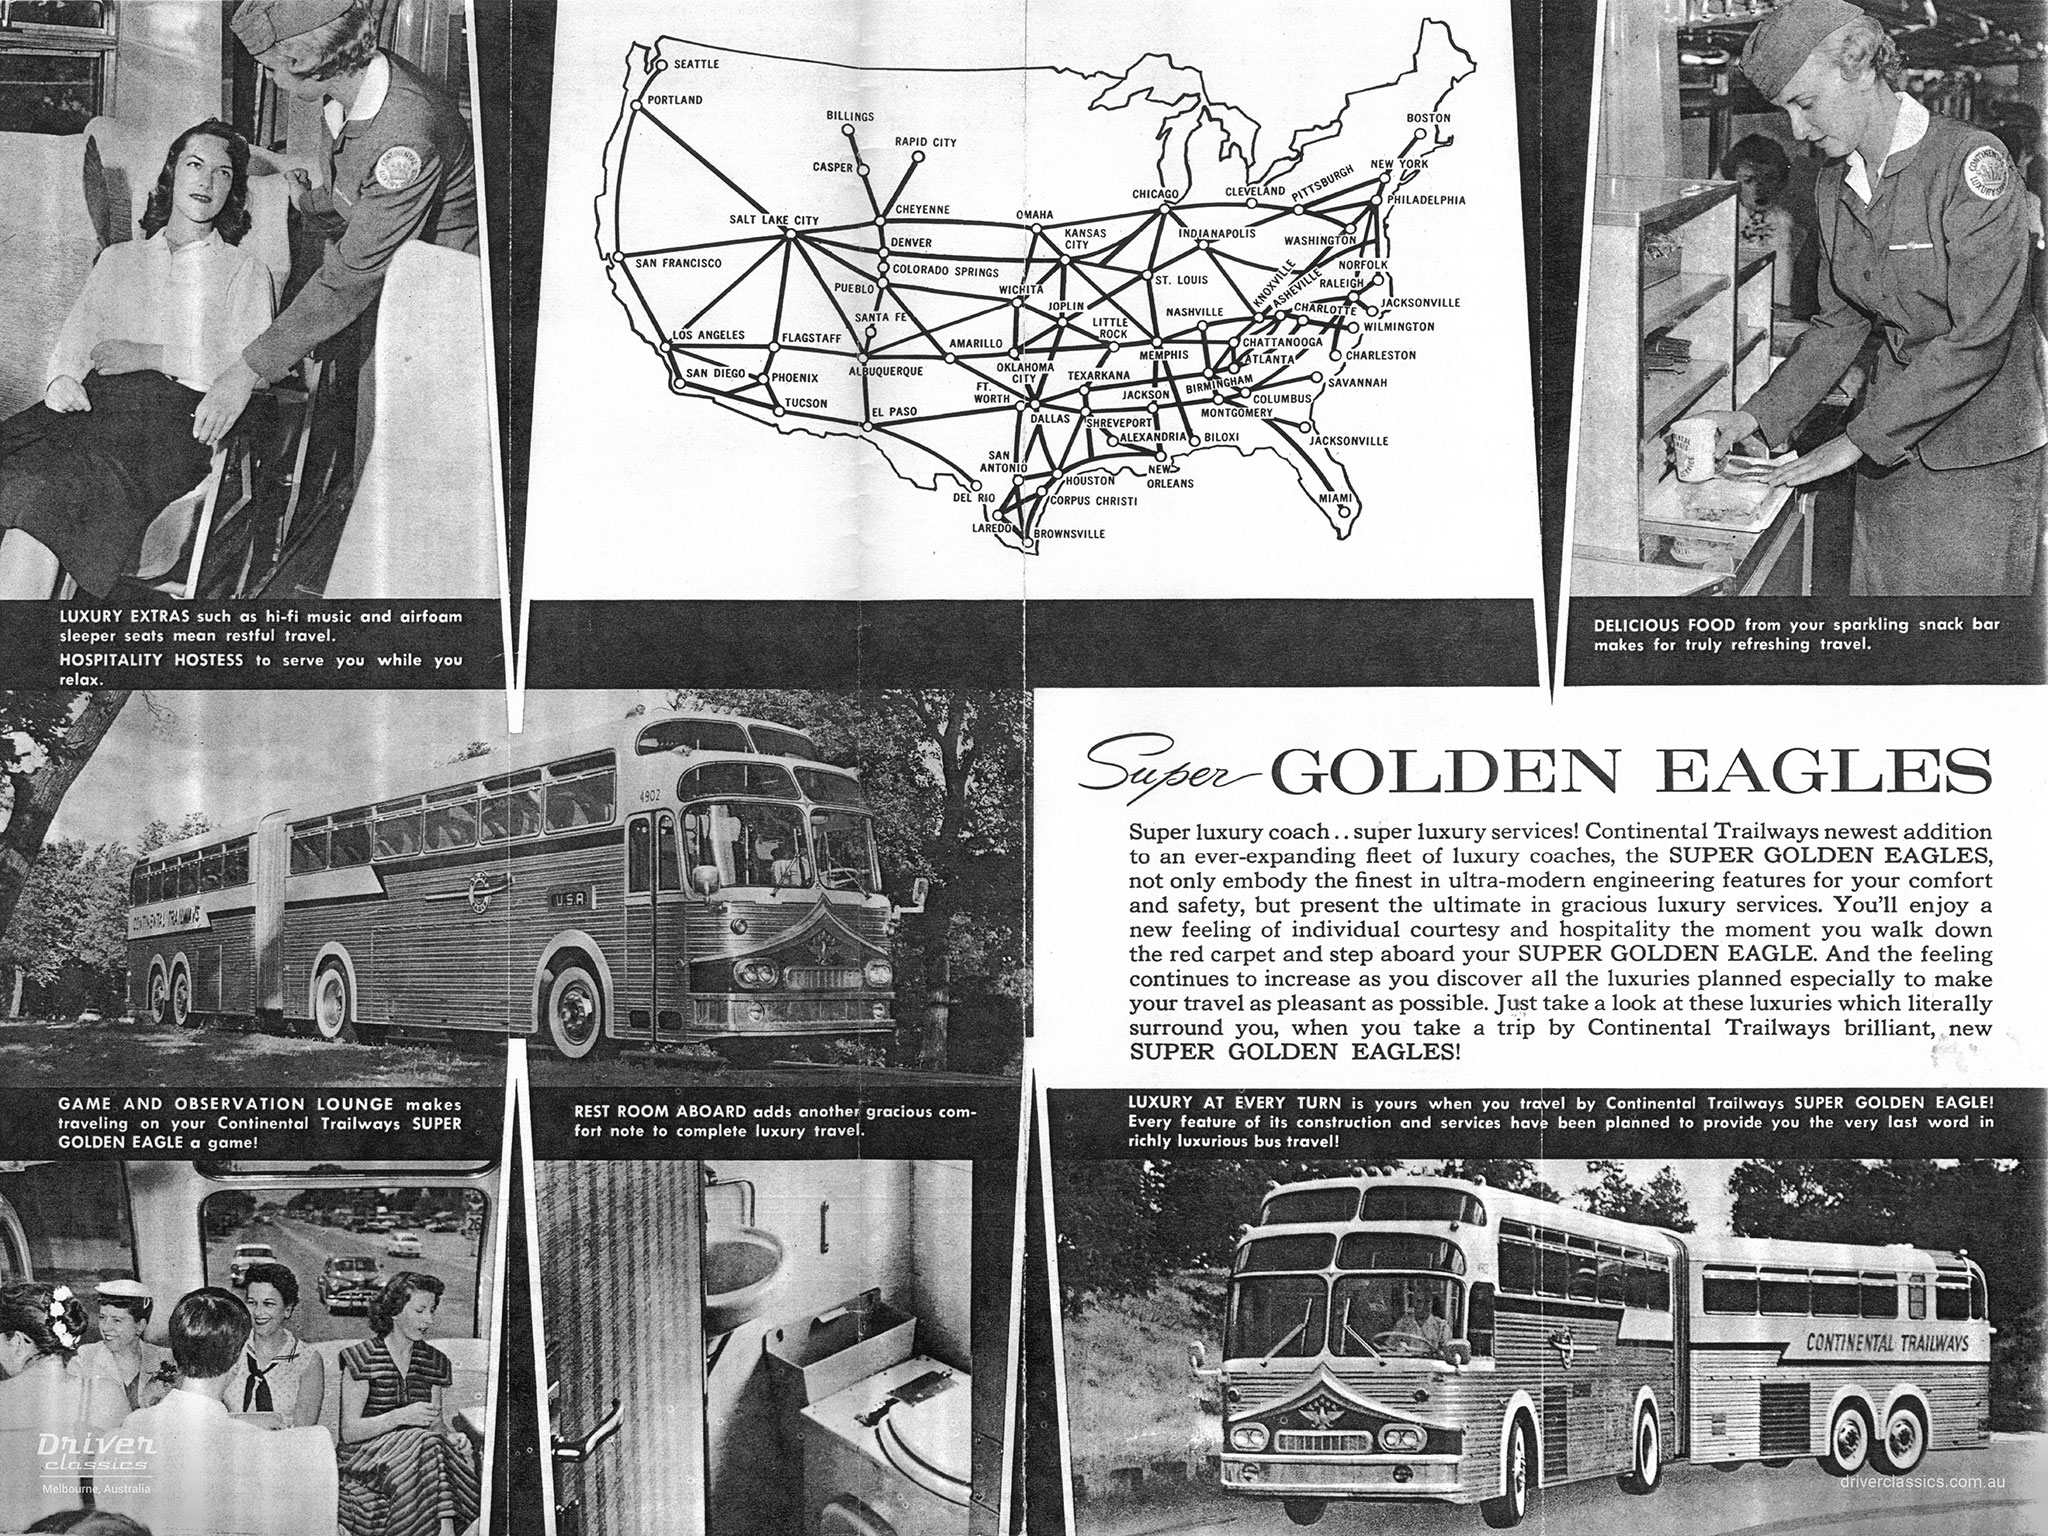 Continental Trailways brochure for the 1959 Super Golden Eagles back